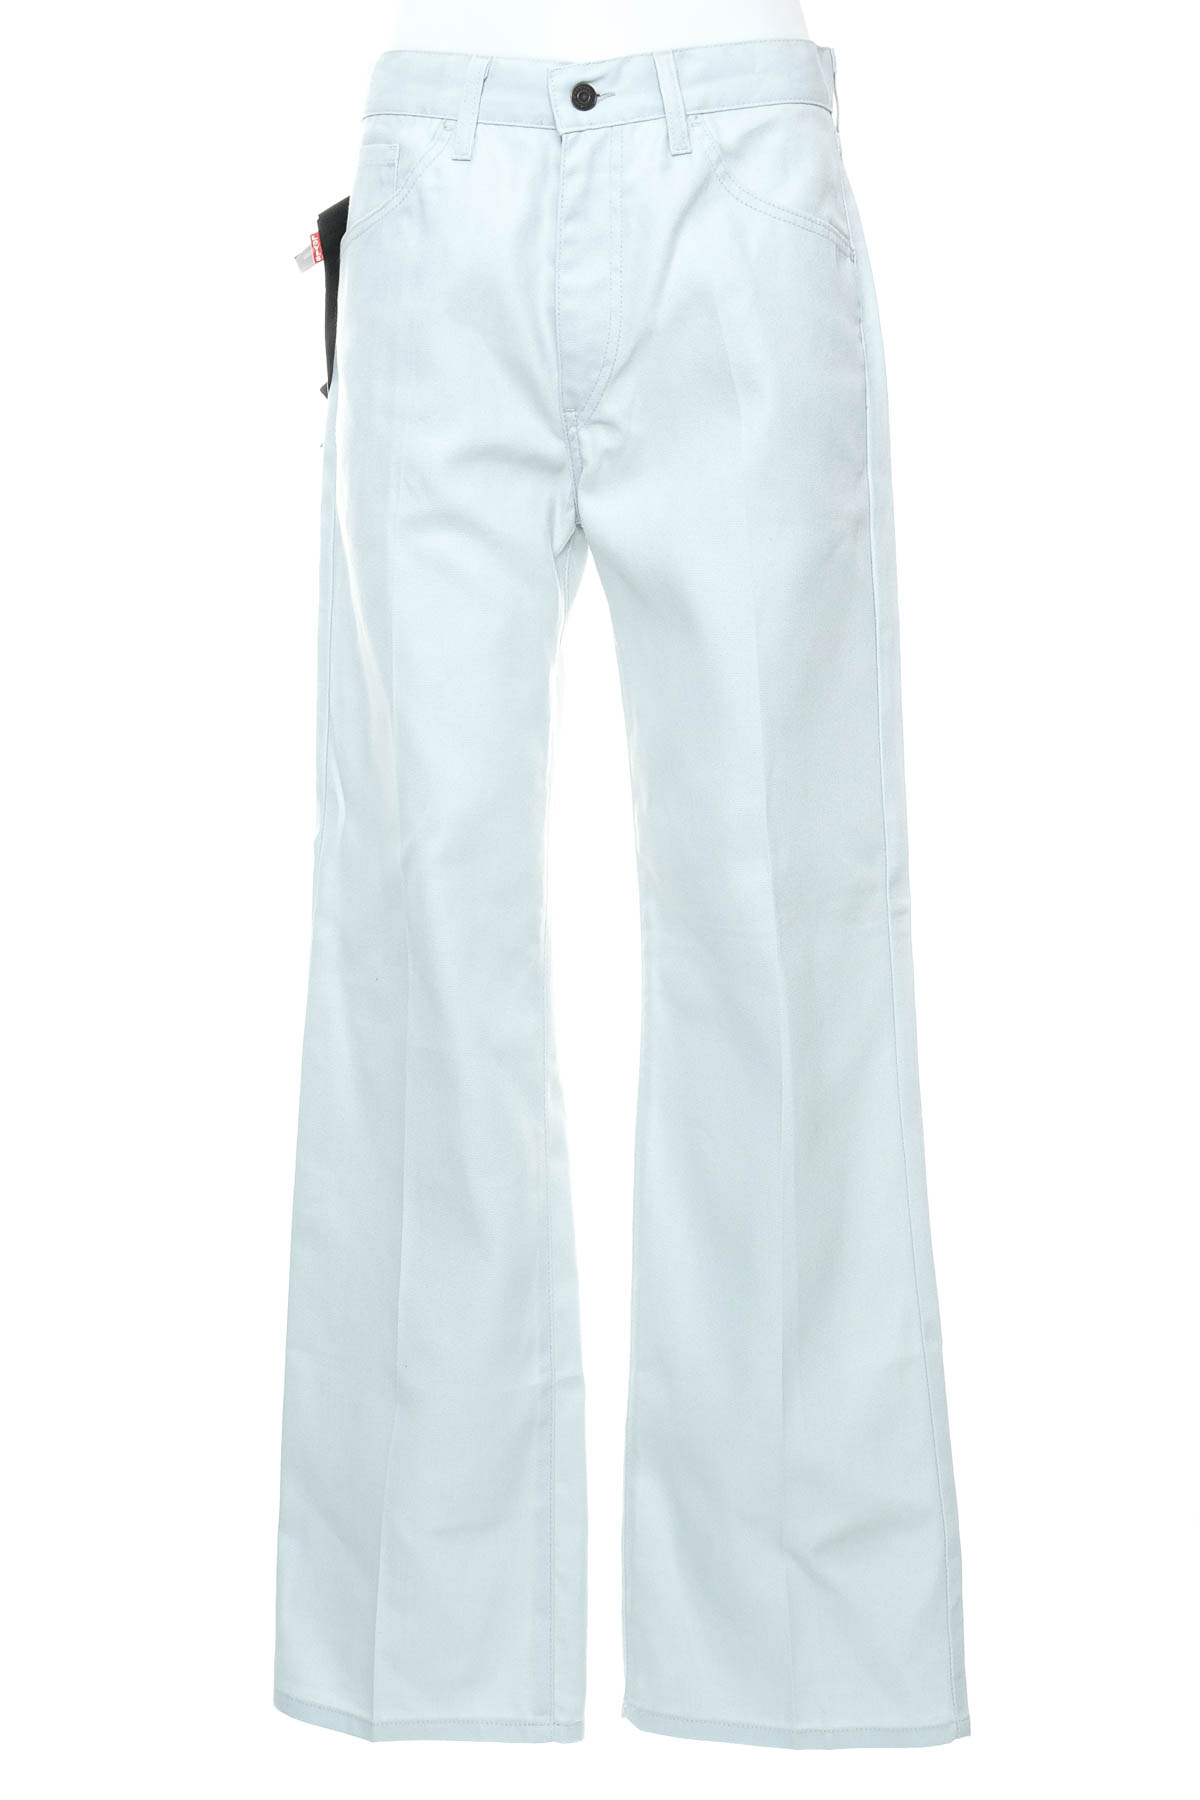 Men's trousers - LEVI'S - 0